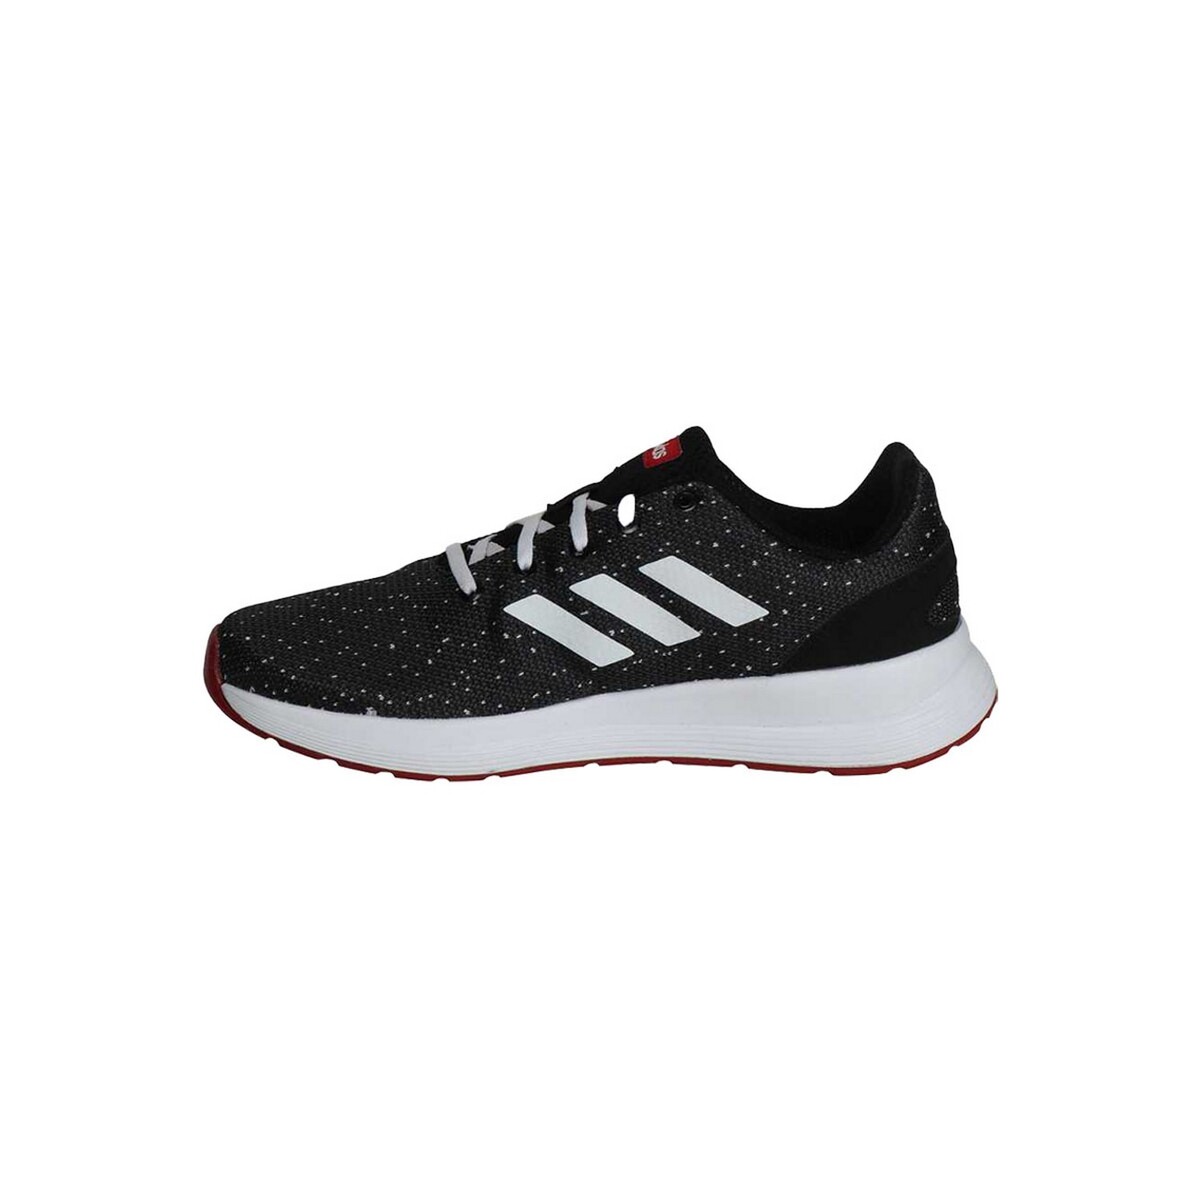 Adidas Mens Sports Shoes CM4921, 9